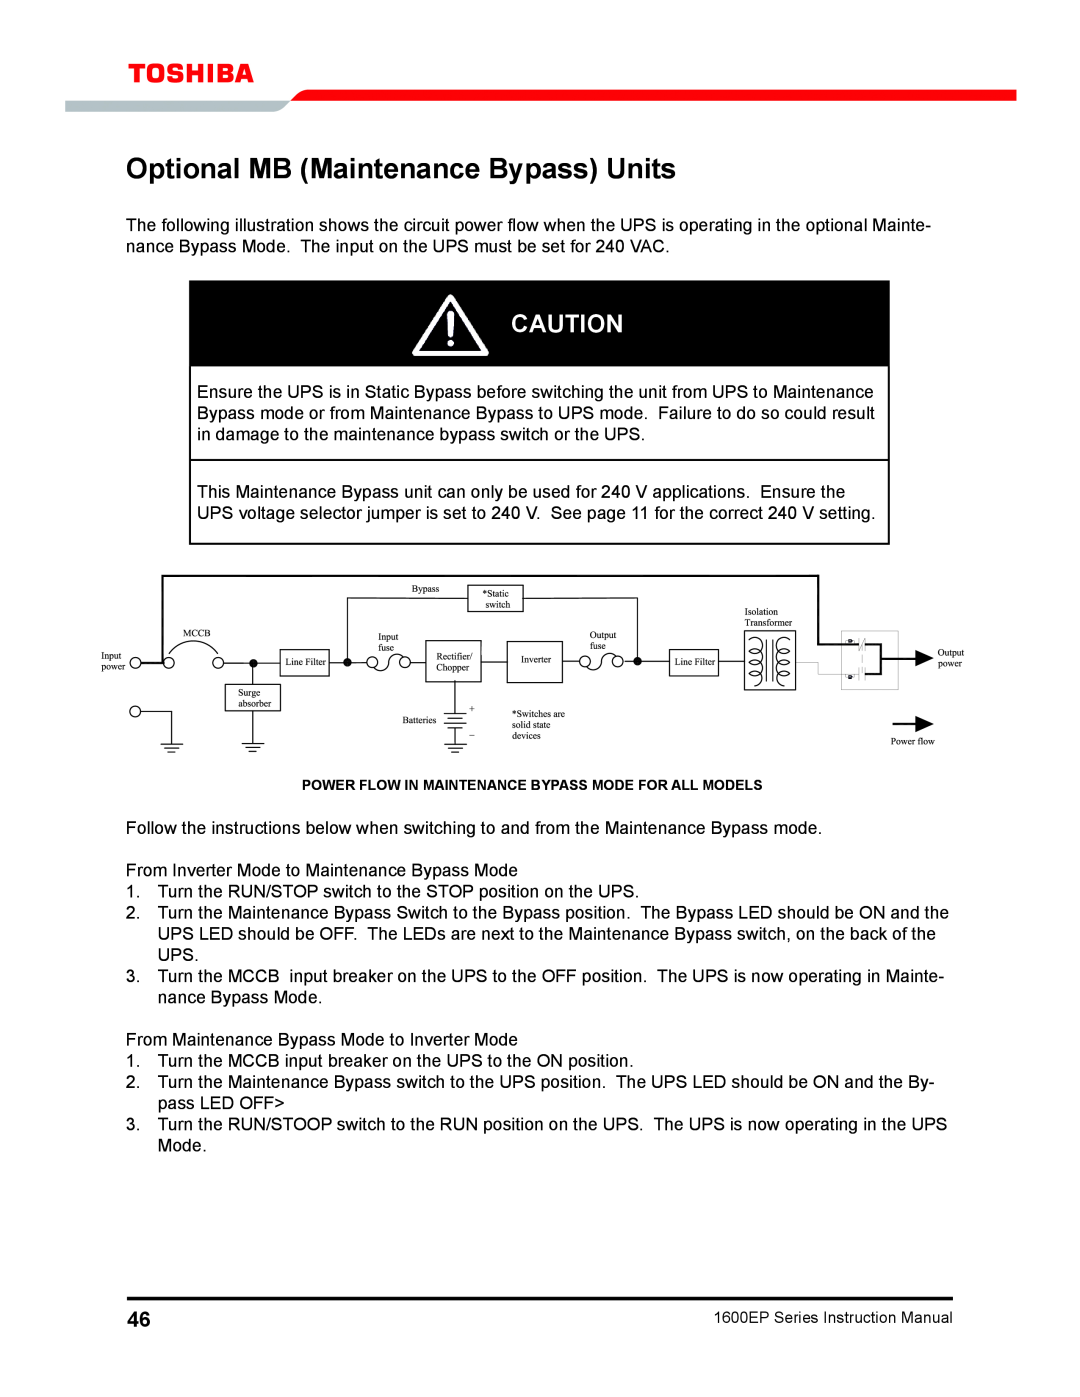 Toshiba 1600EP Series manual Optional MB Maintenance Bypass Units 